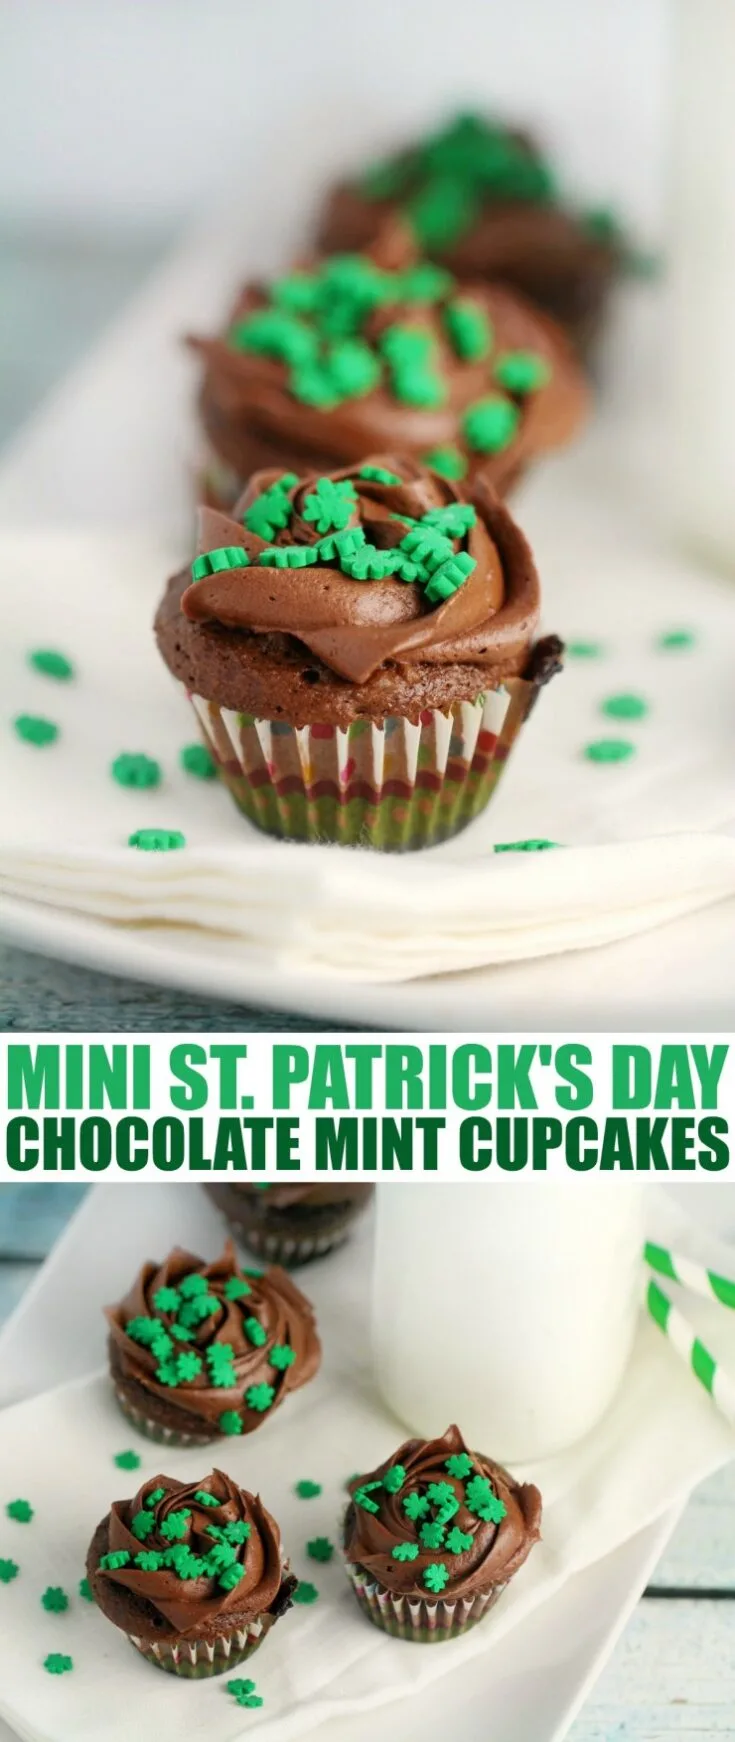 Mini St. Patrick's Day Chocolate Mint Cupcakes